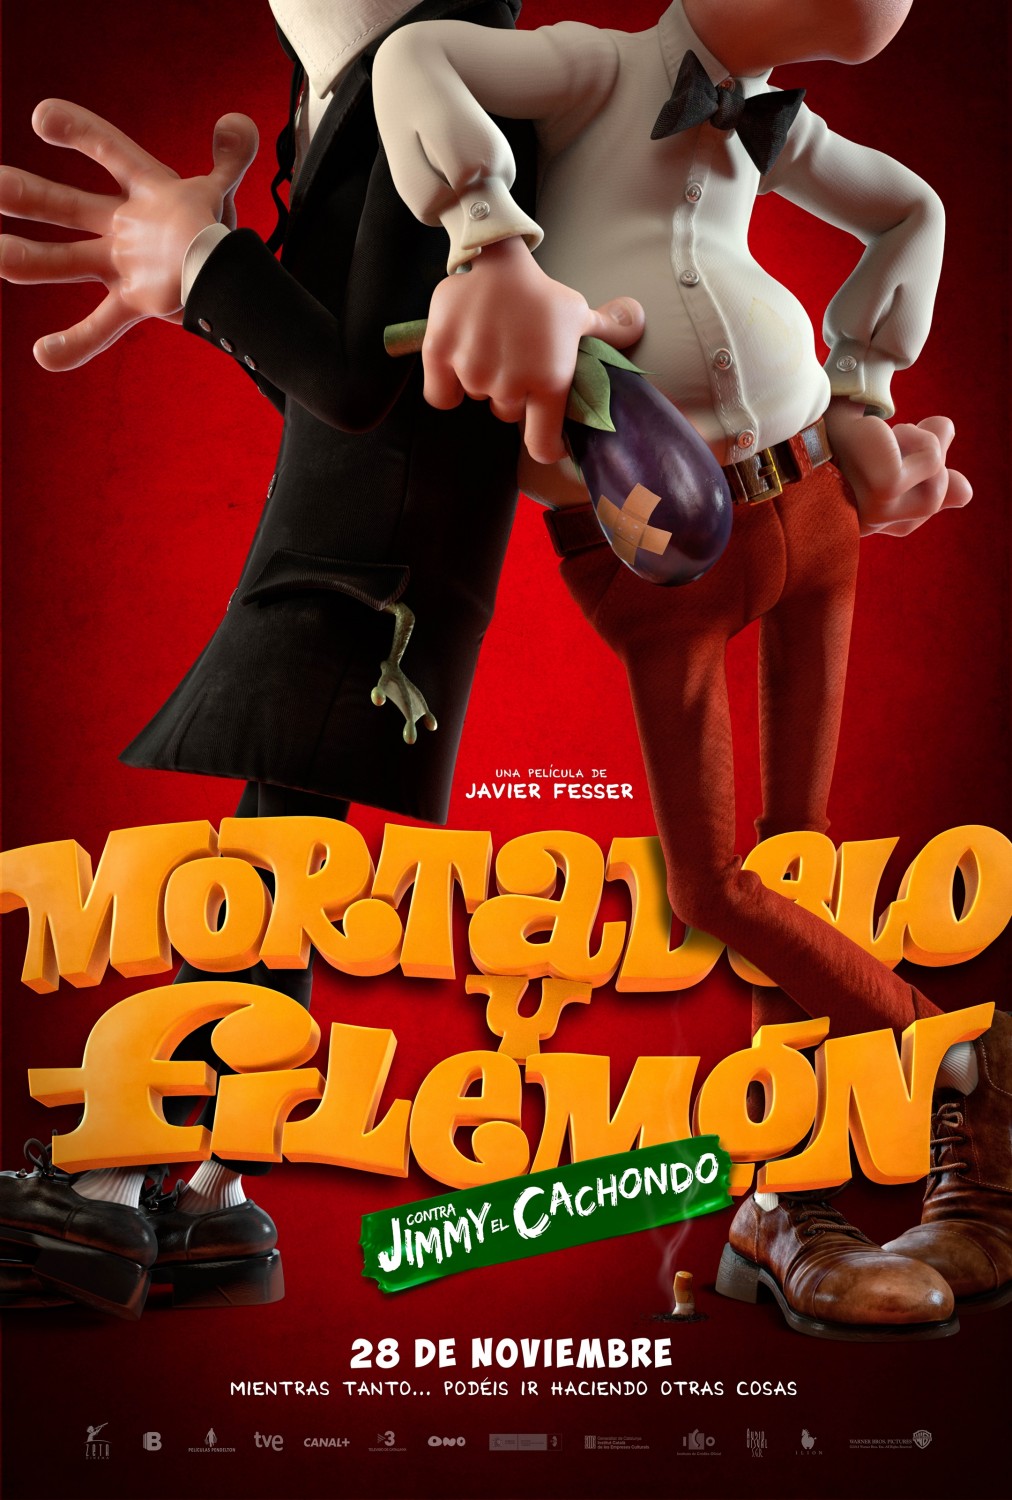 Extra Large Movie Poster Image for Mortadelo y Filemón contra Jimmy el Cachondo (#1 of 2)